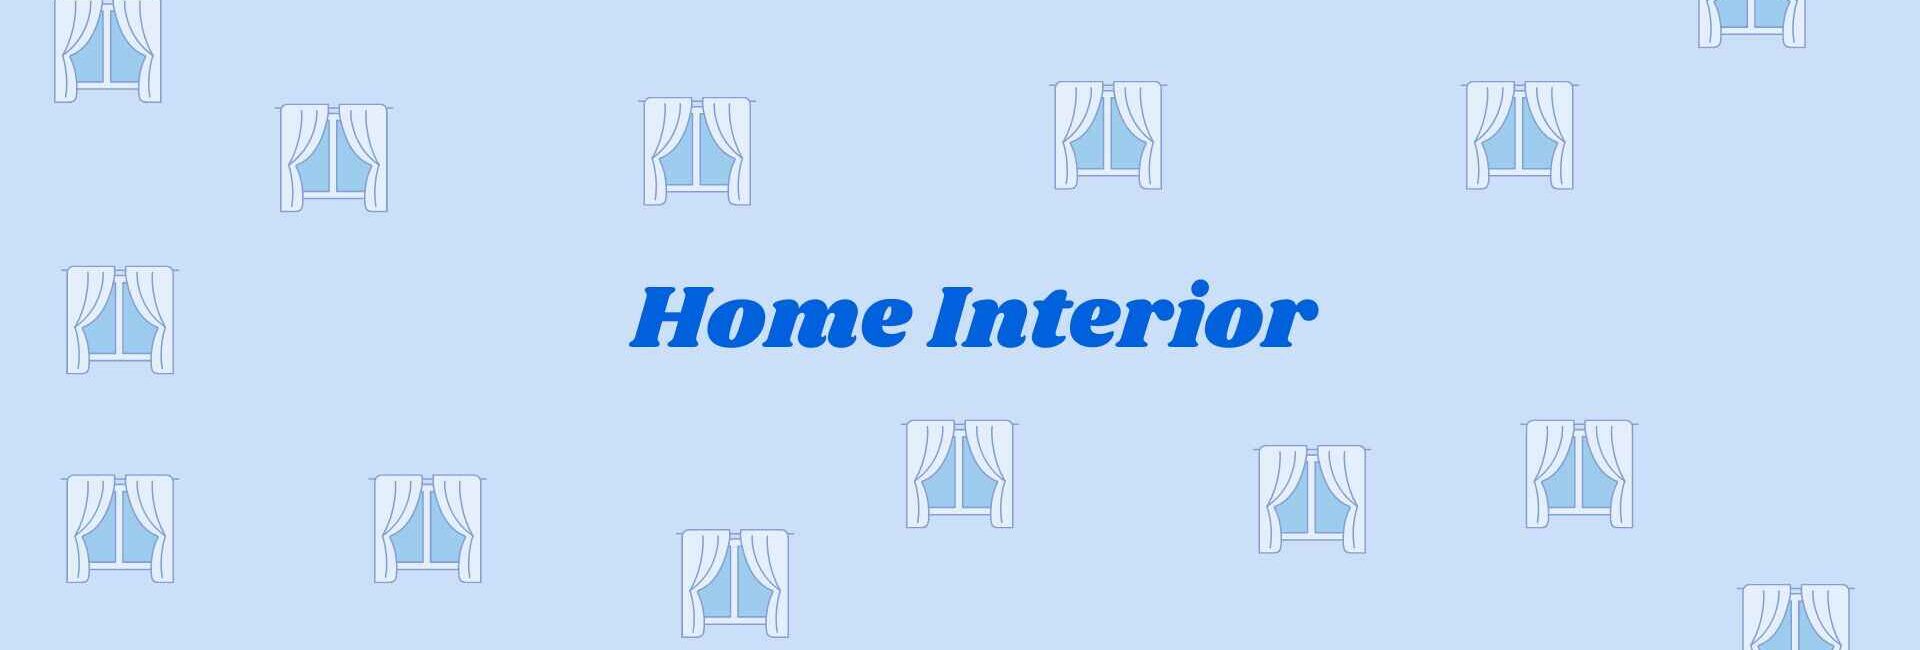 Home Interior - home interior dealers in Noida